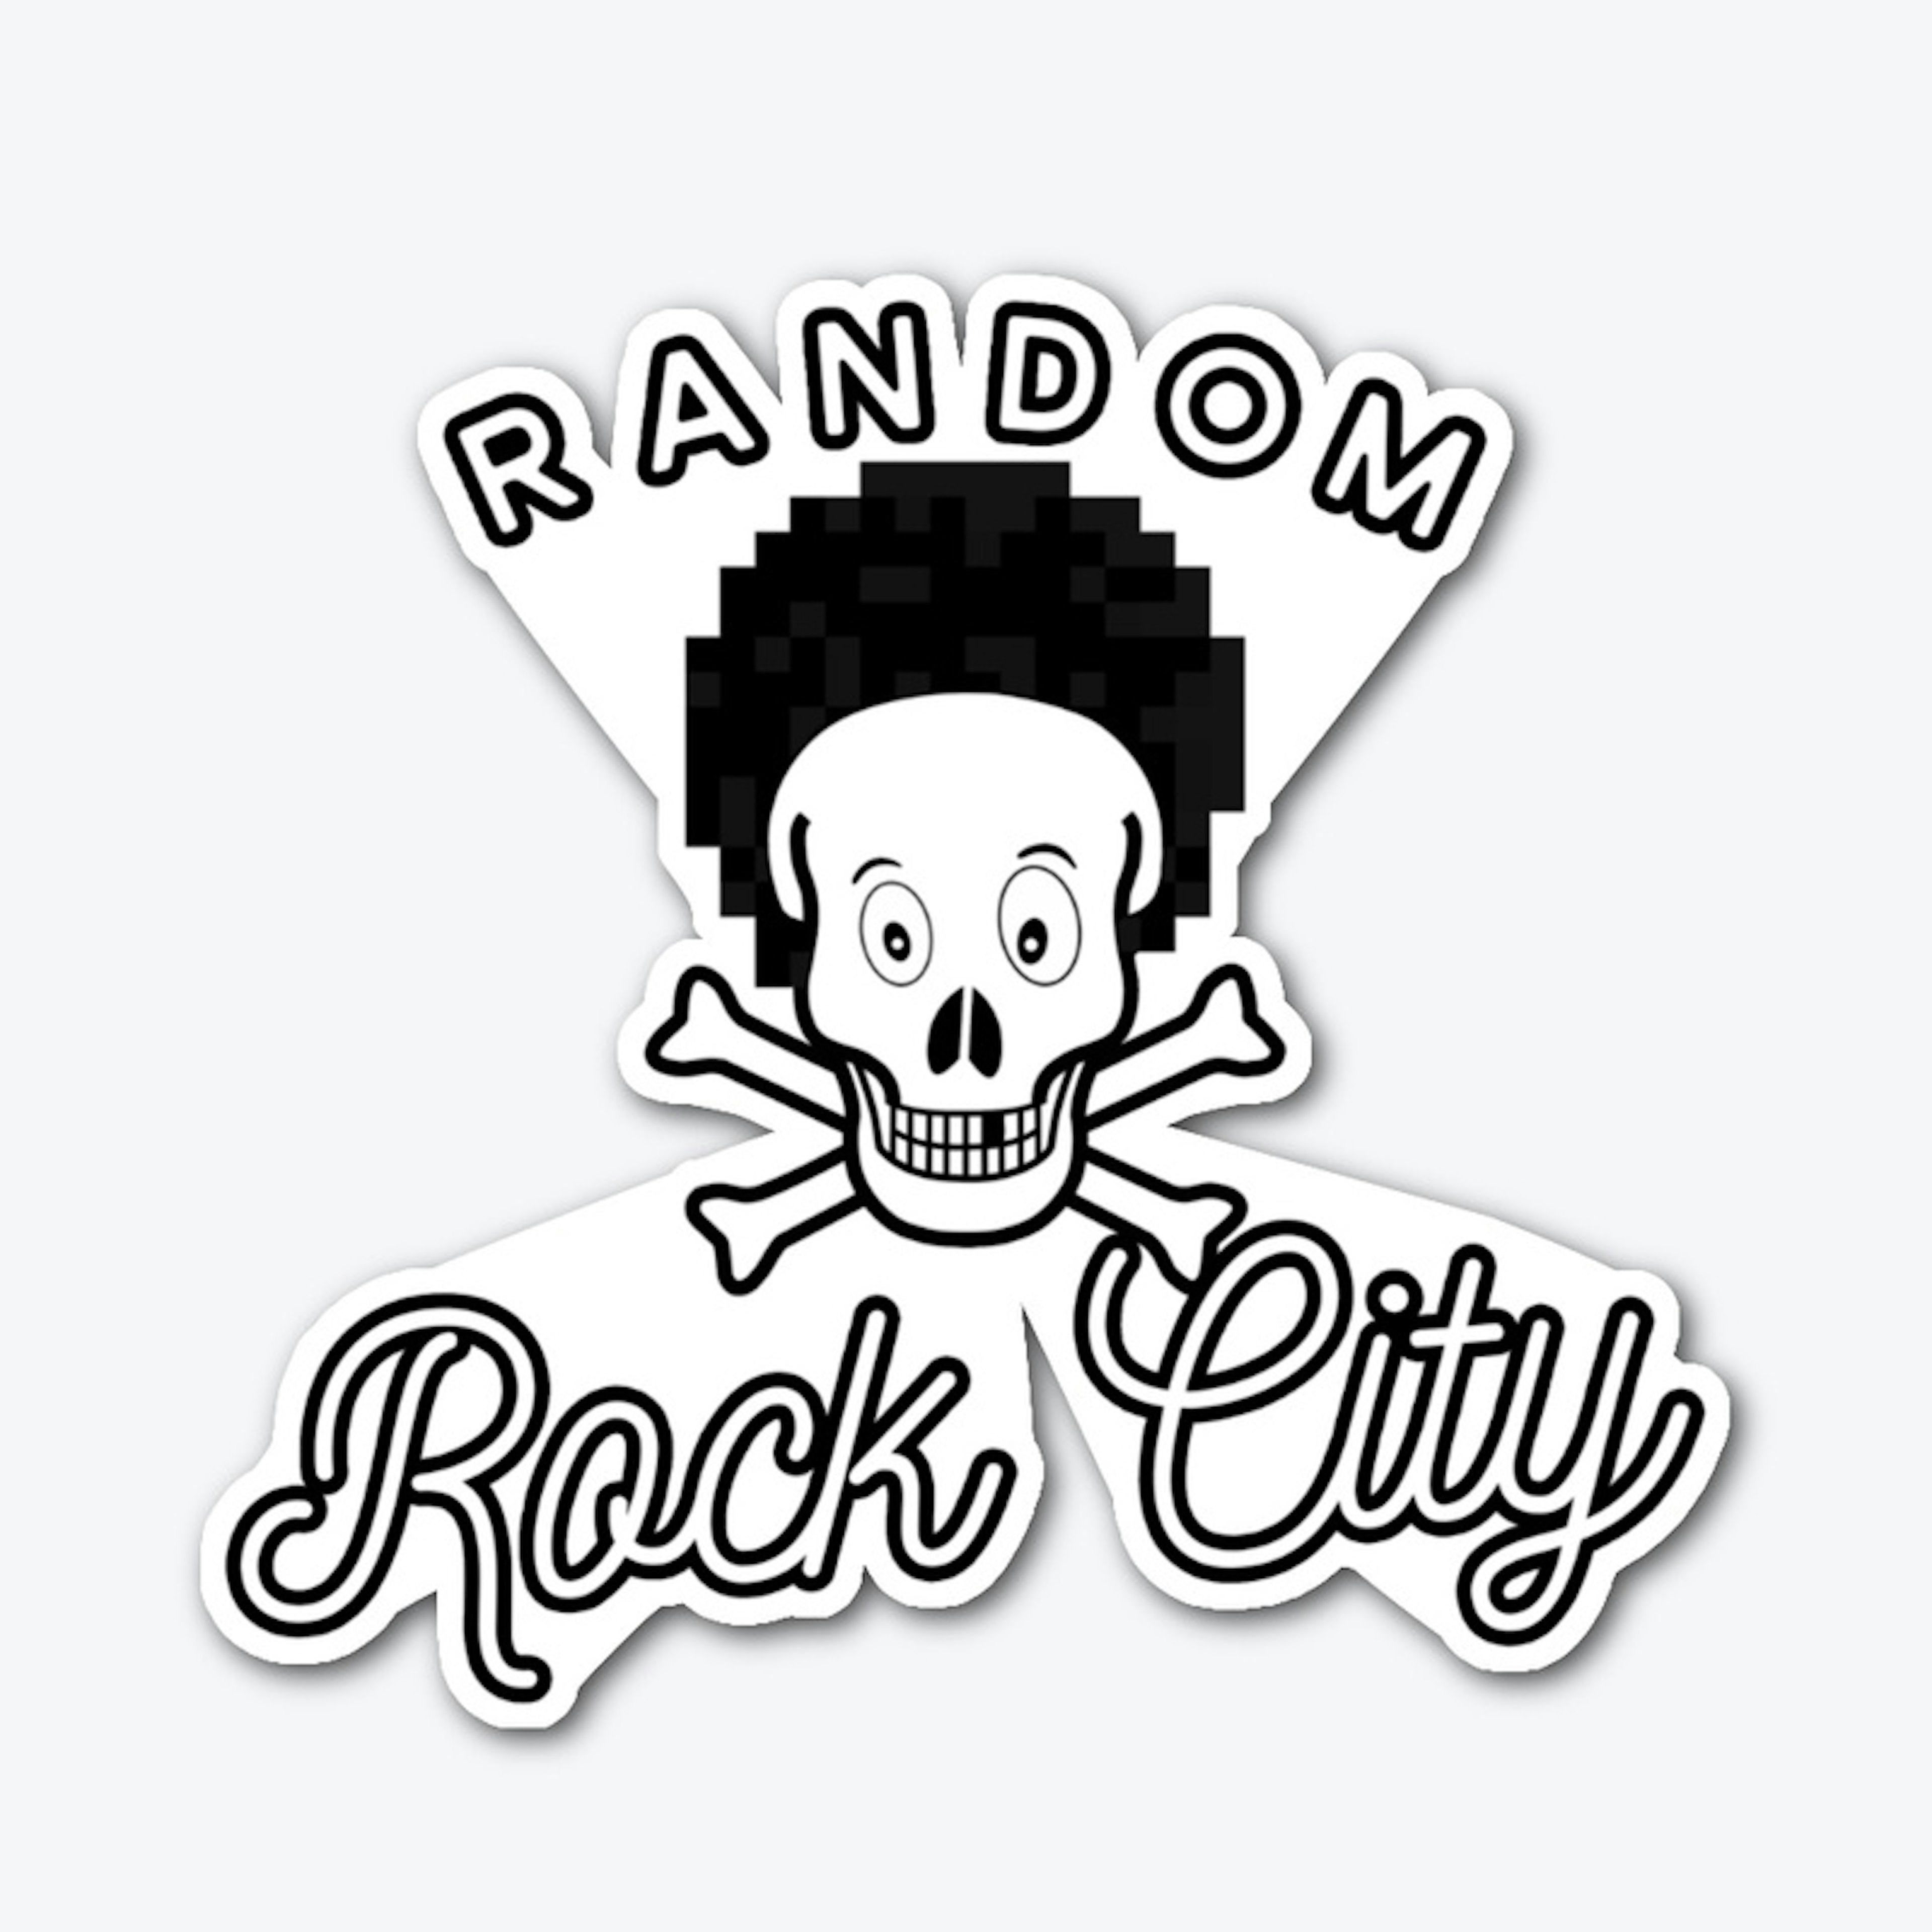 Random Rock City